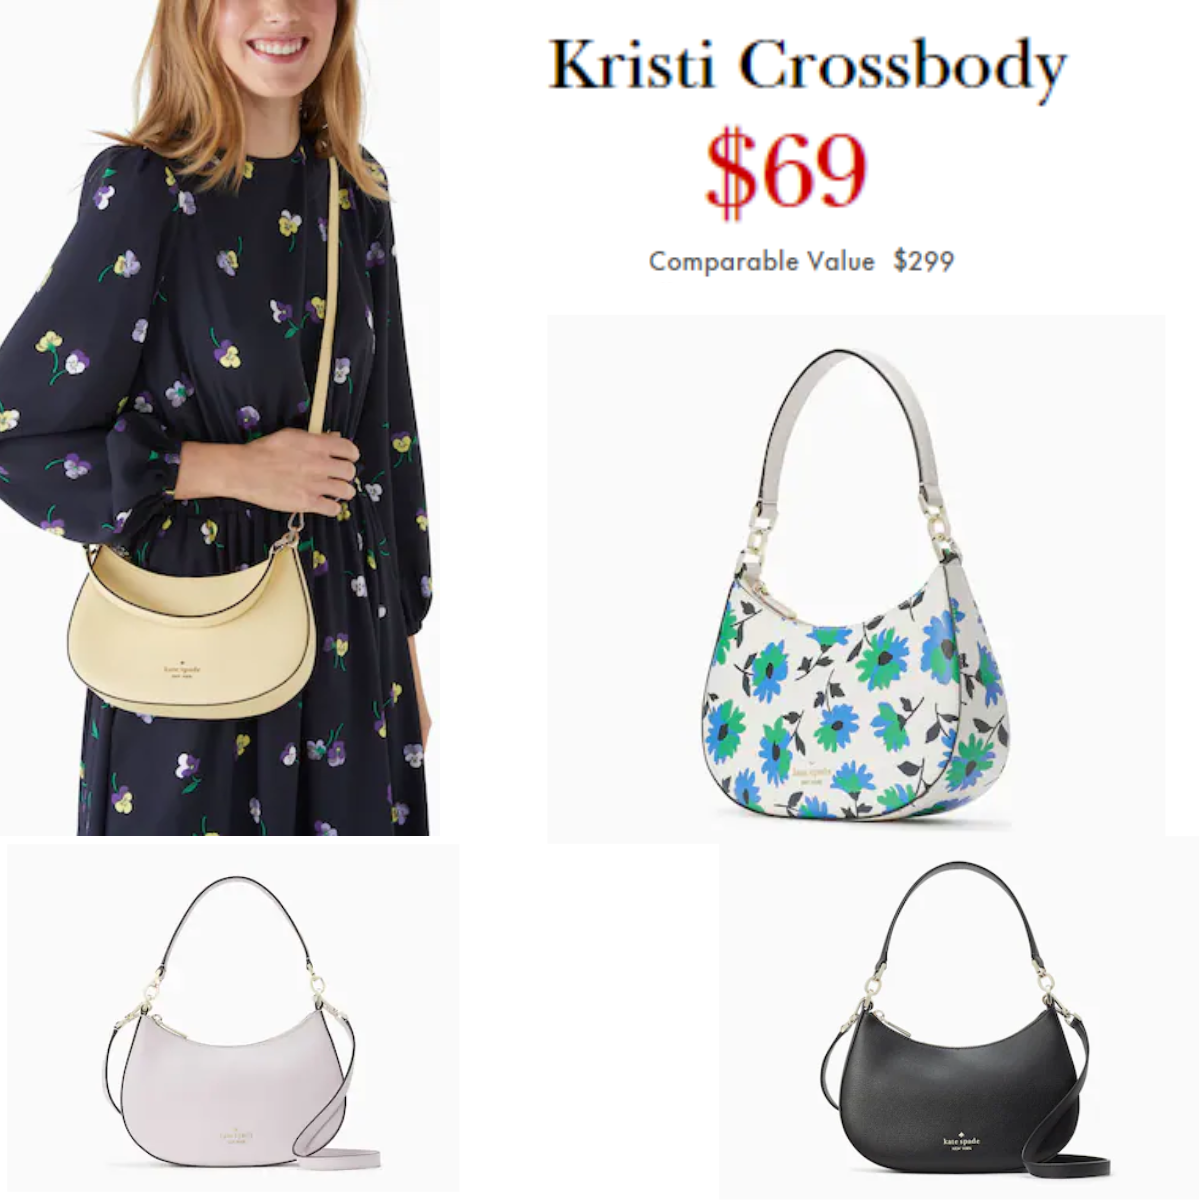 Kate Spade Kristi Crossbody at a great price